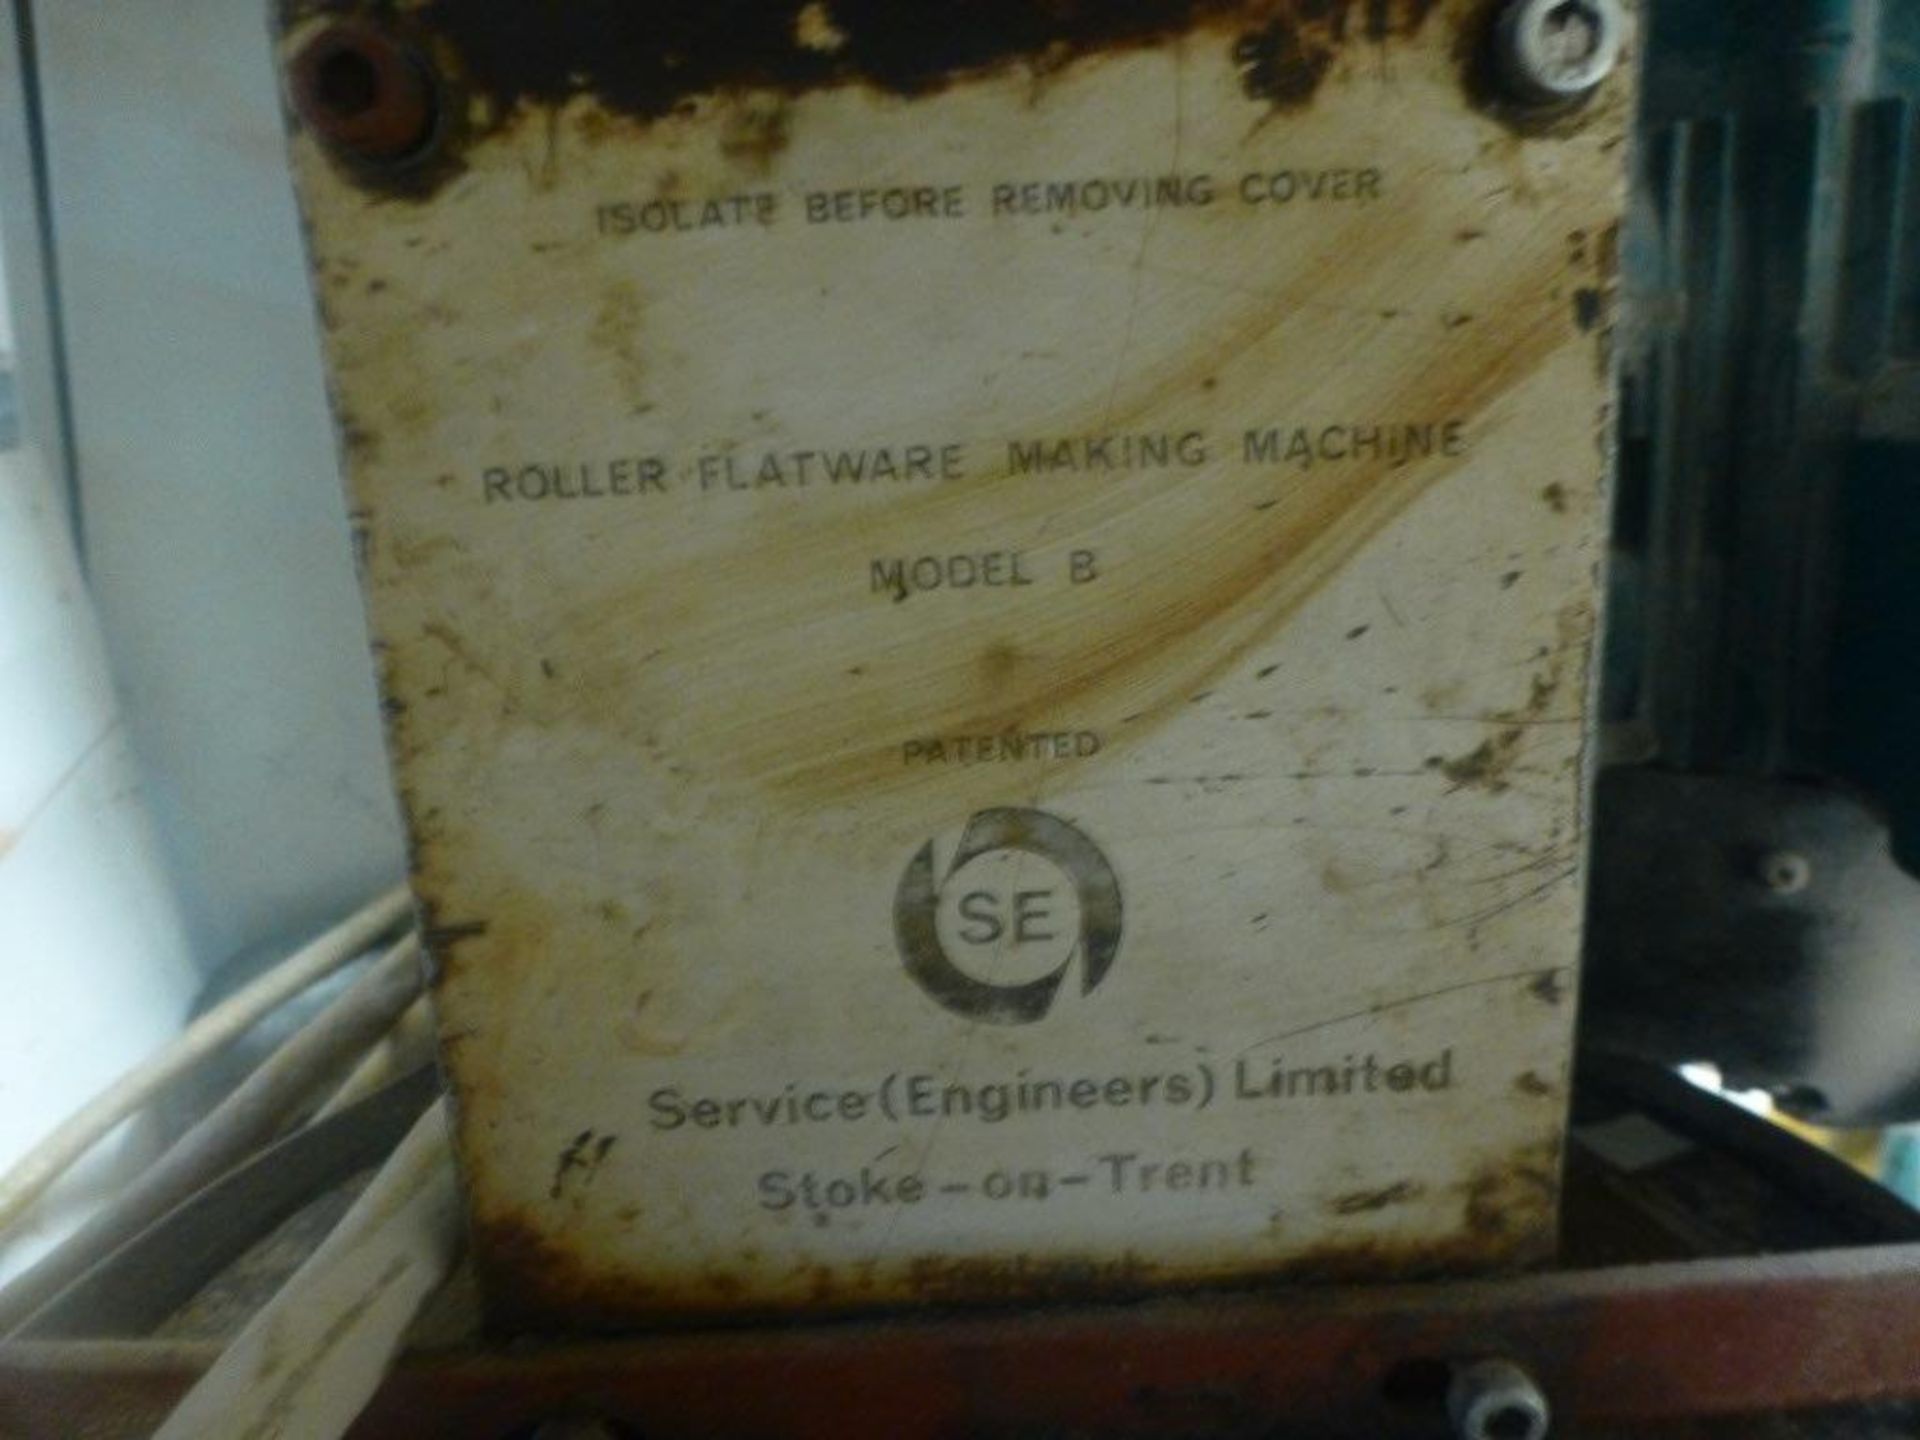 Service Engineers Model B roller flatware making machine, Plant No MB1 Model B1 - Image 2 of 4